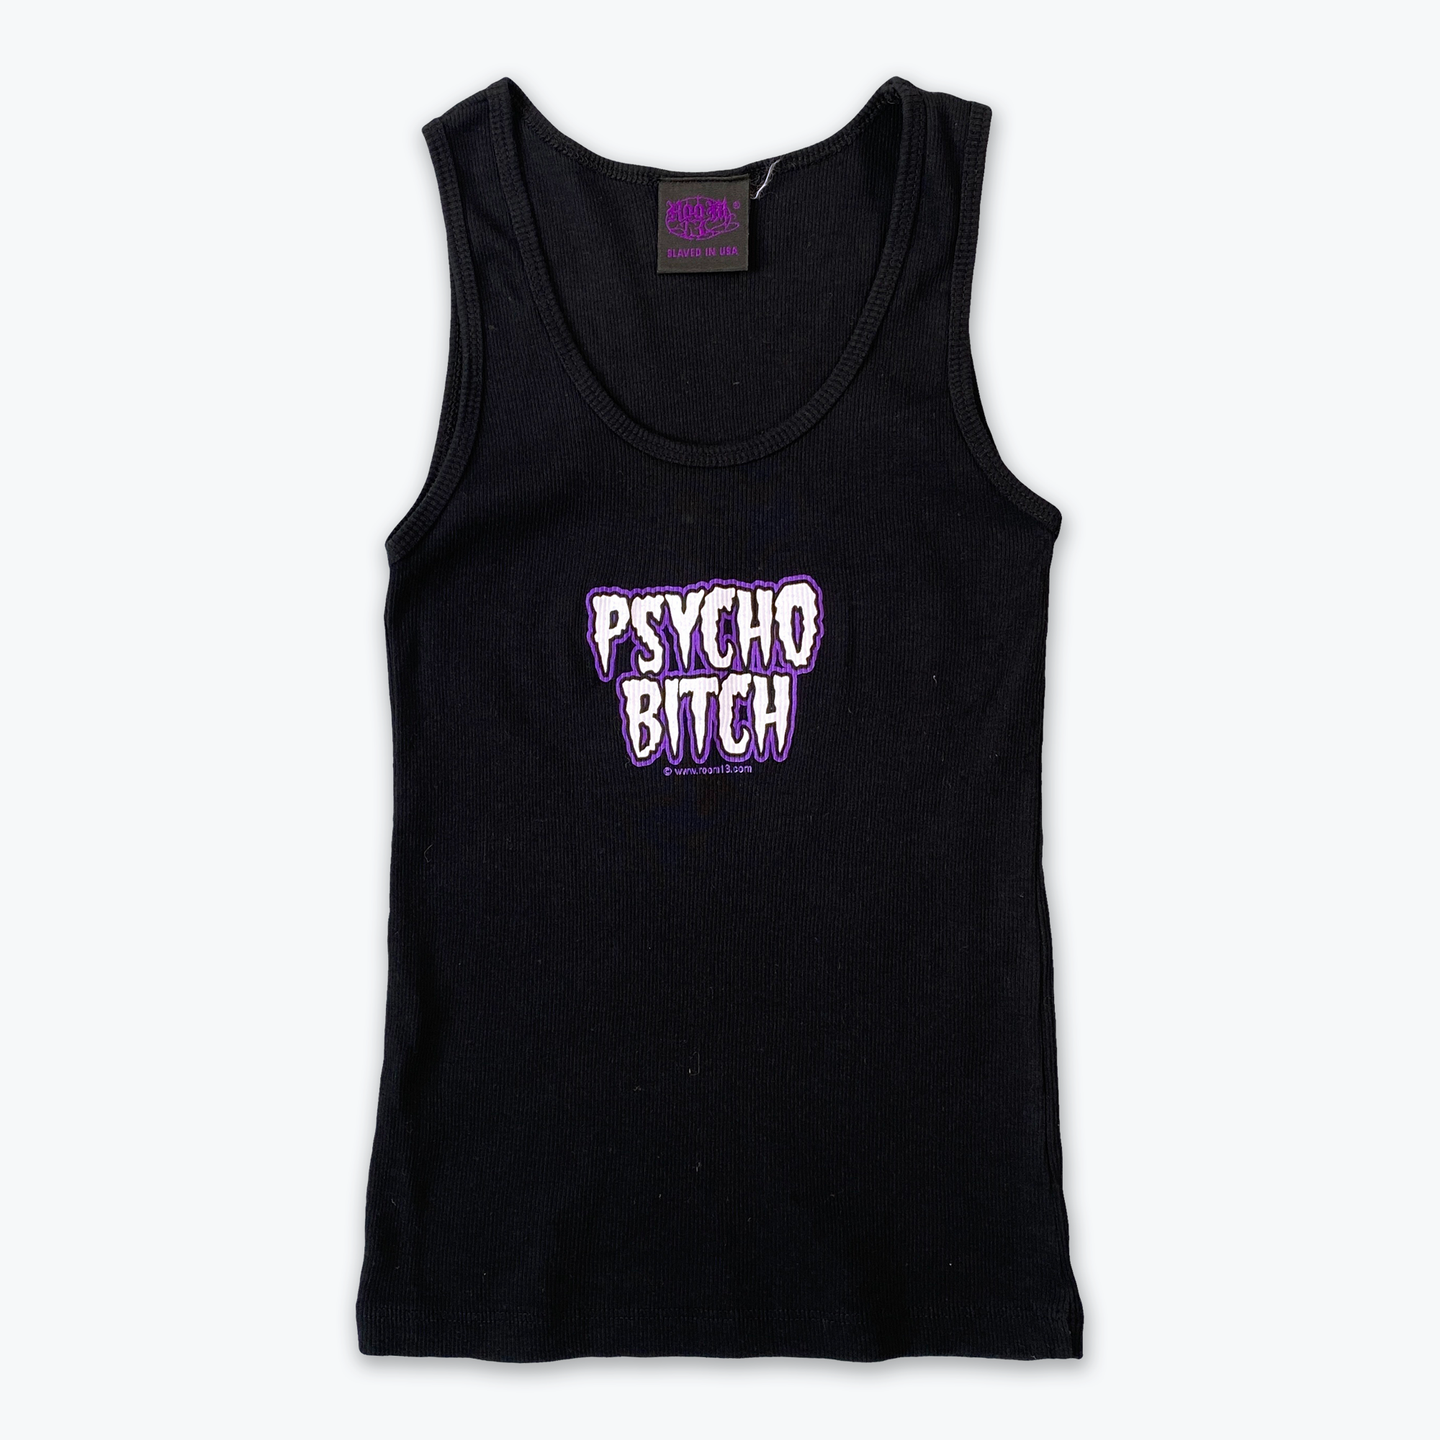 Room 13 Psycho B*tch Vest (Black)